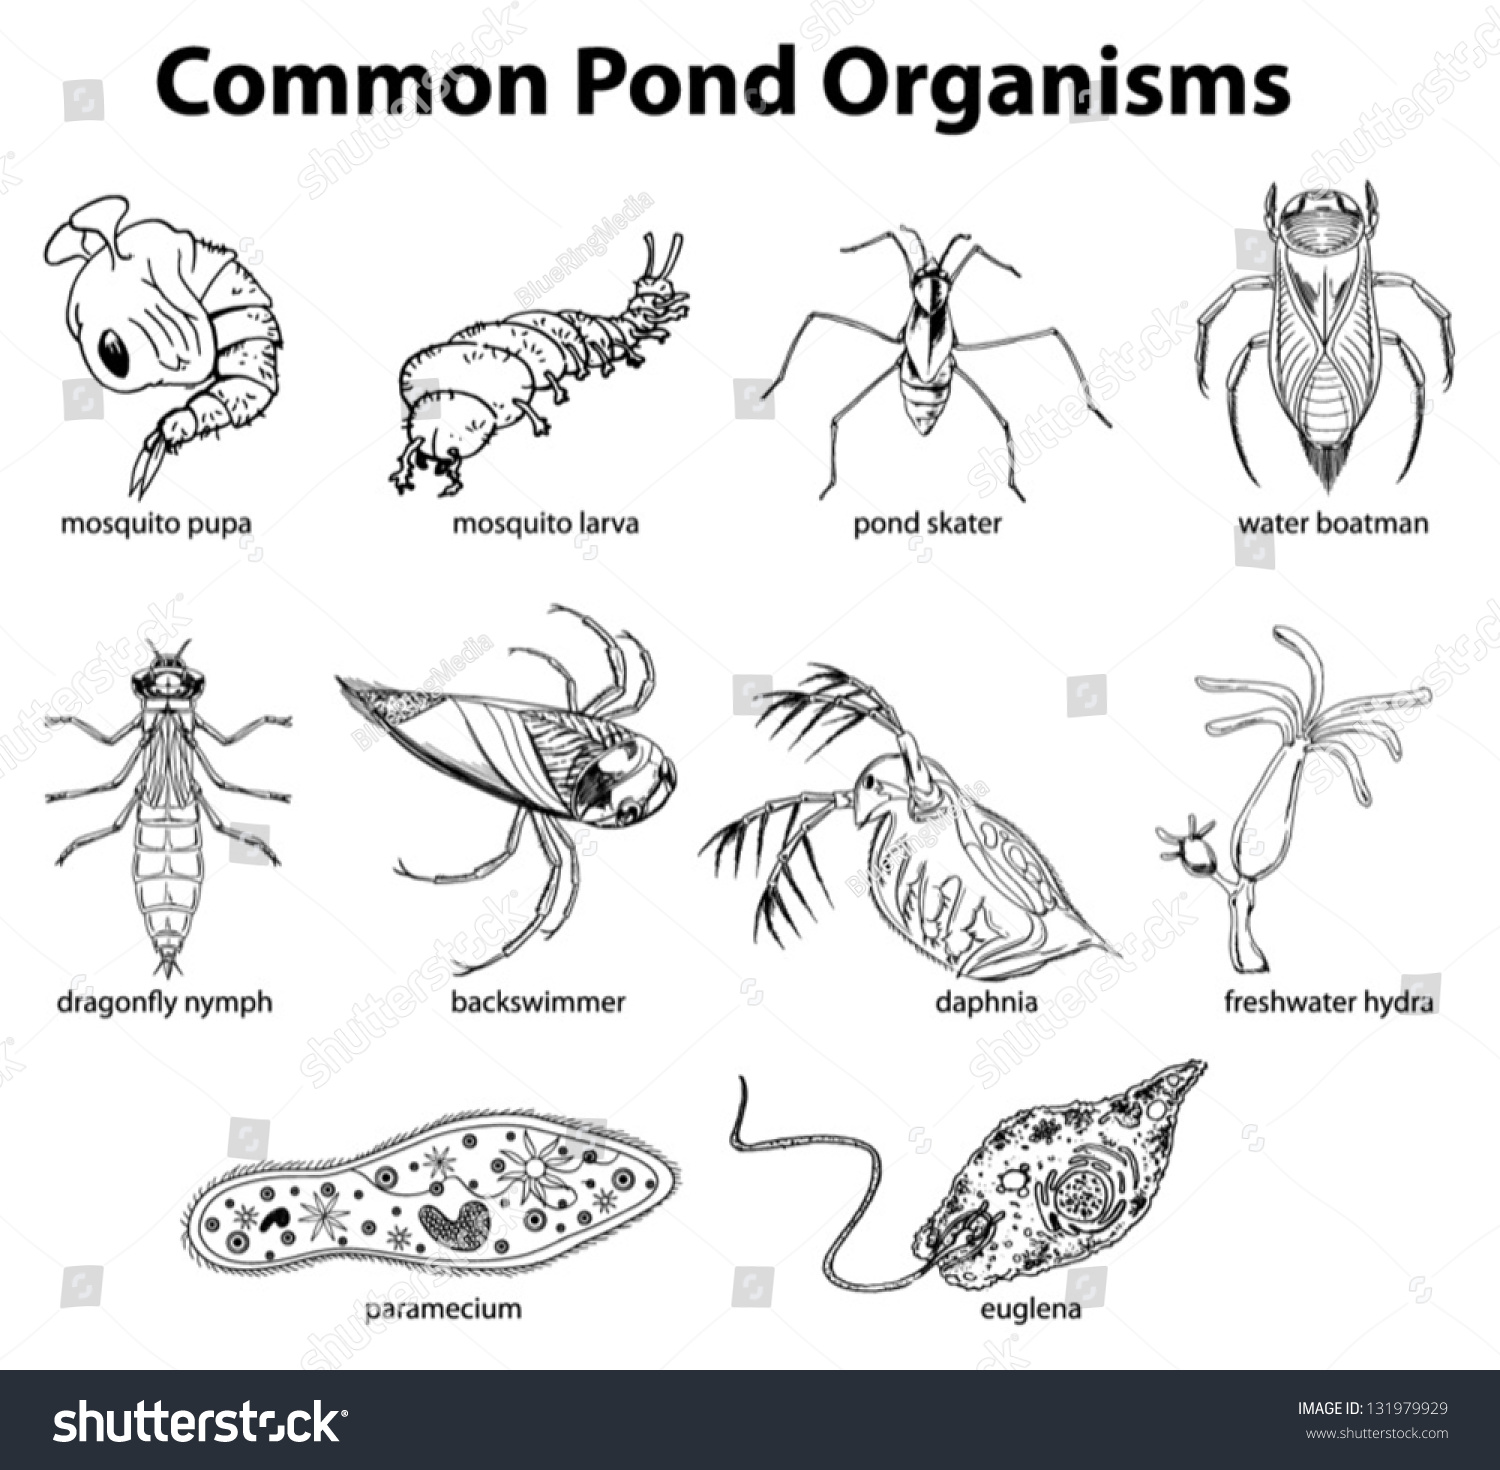 Pond Microorganisms Identification Chart